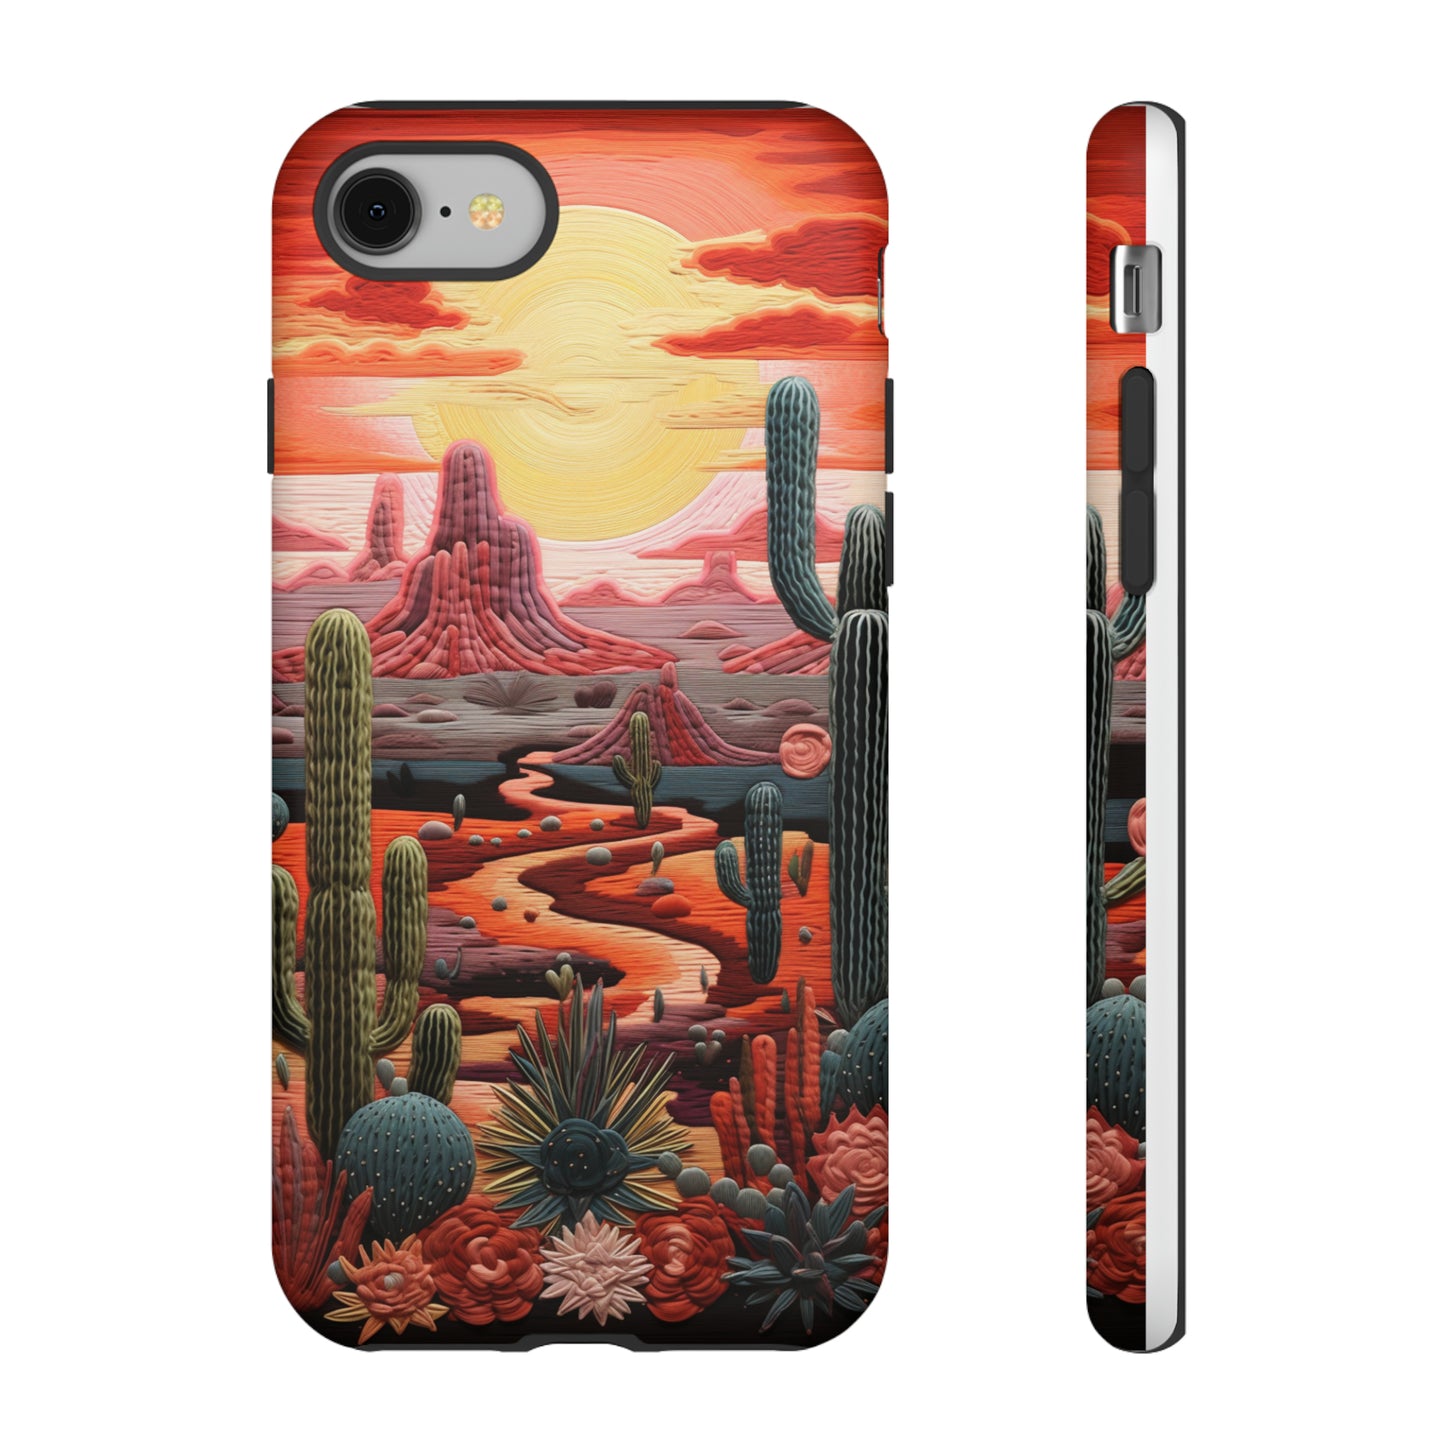 Serene desert and cactus design for iPhone XS Max